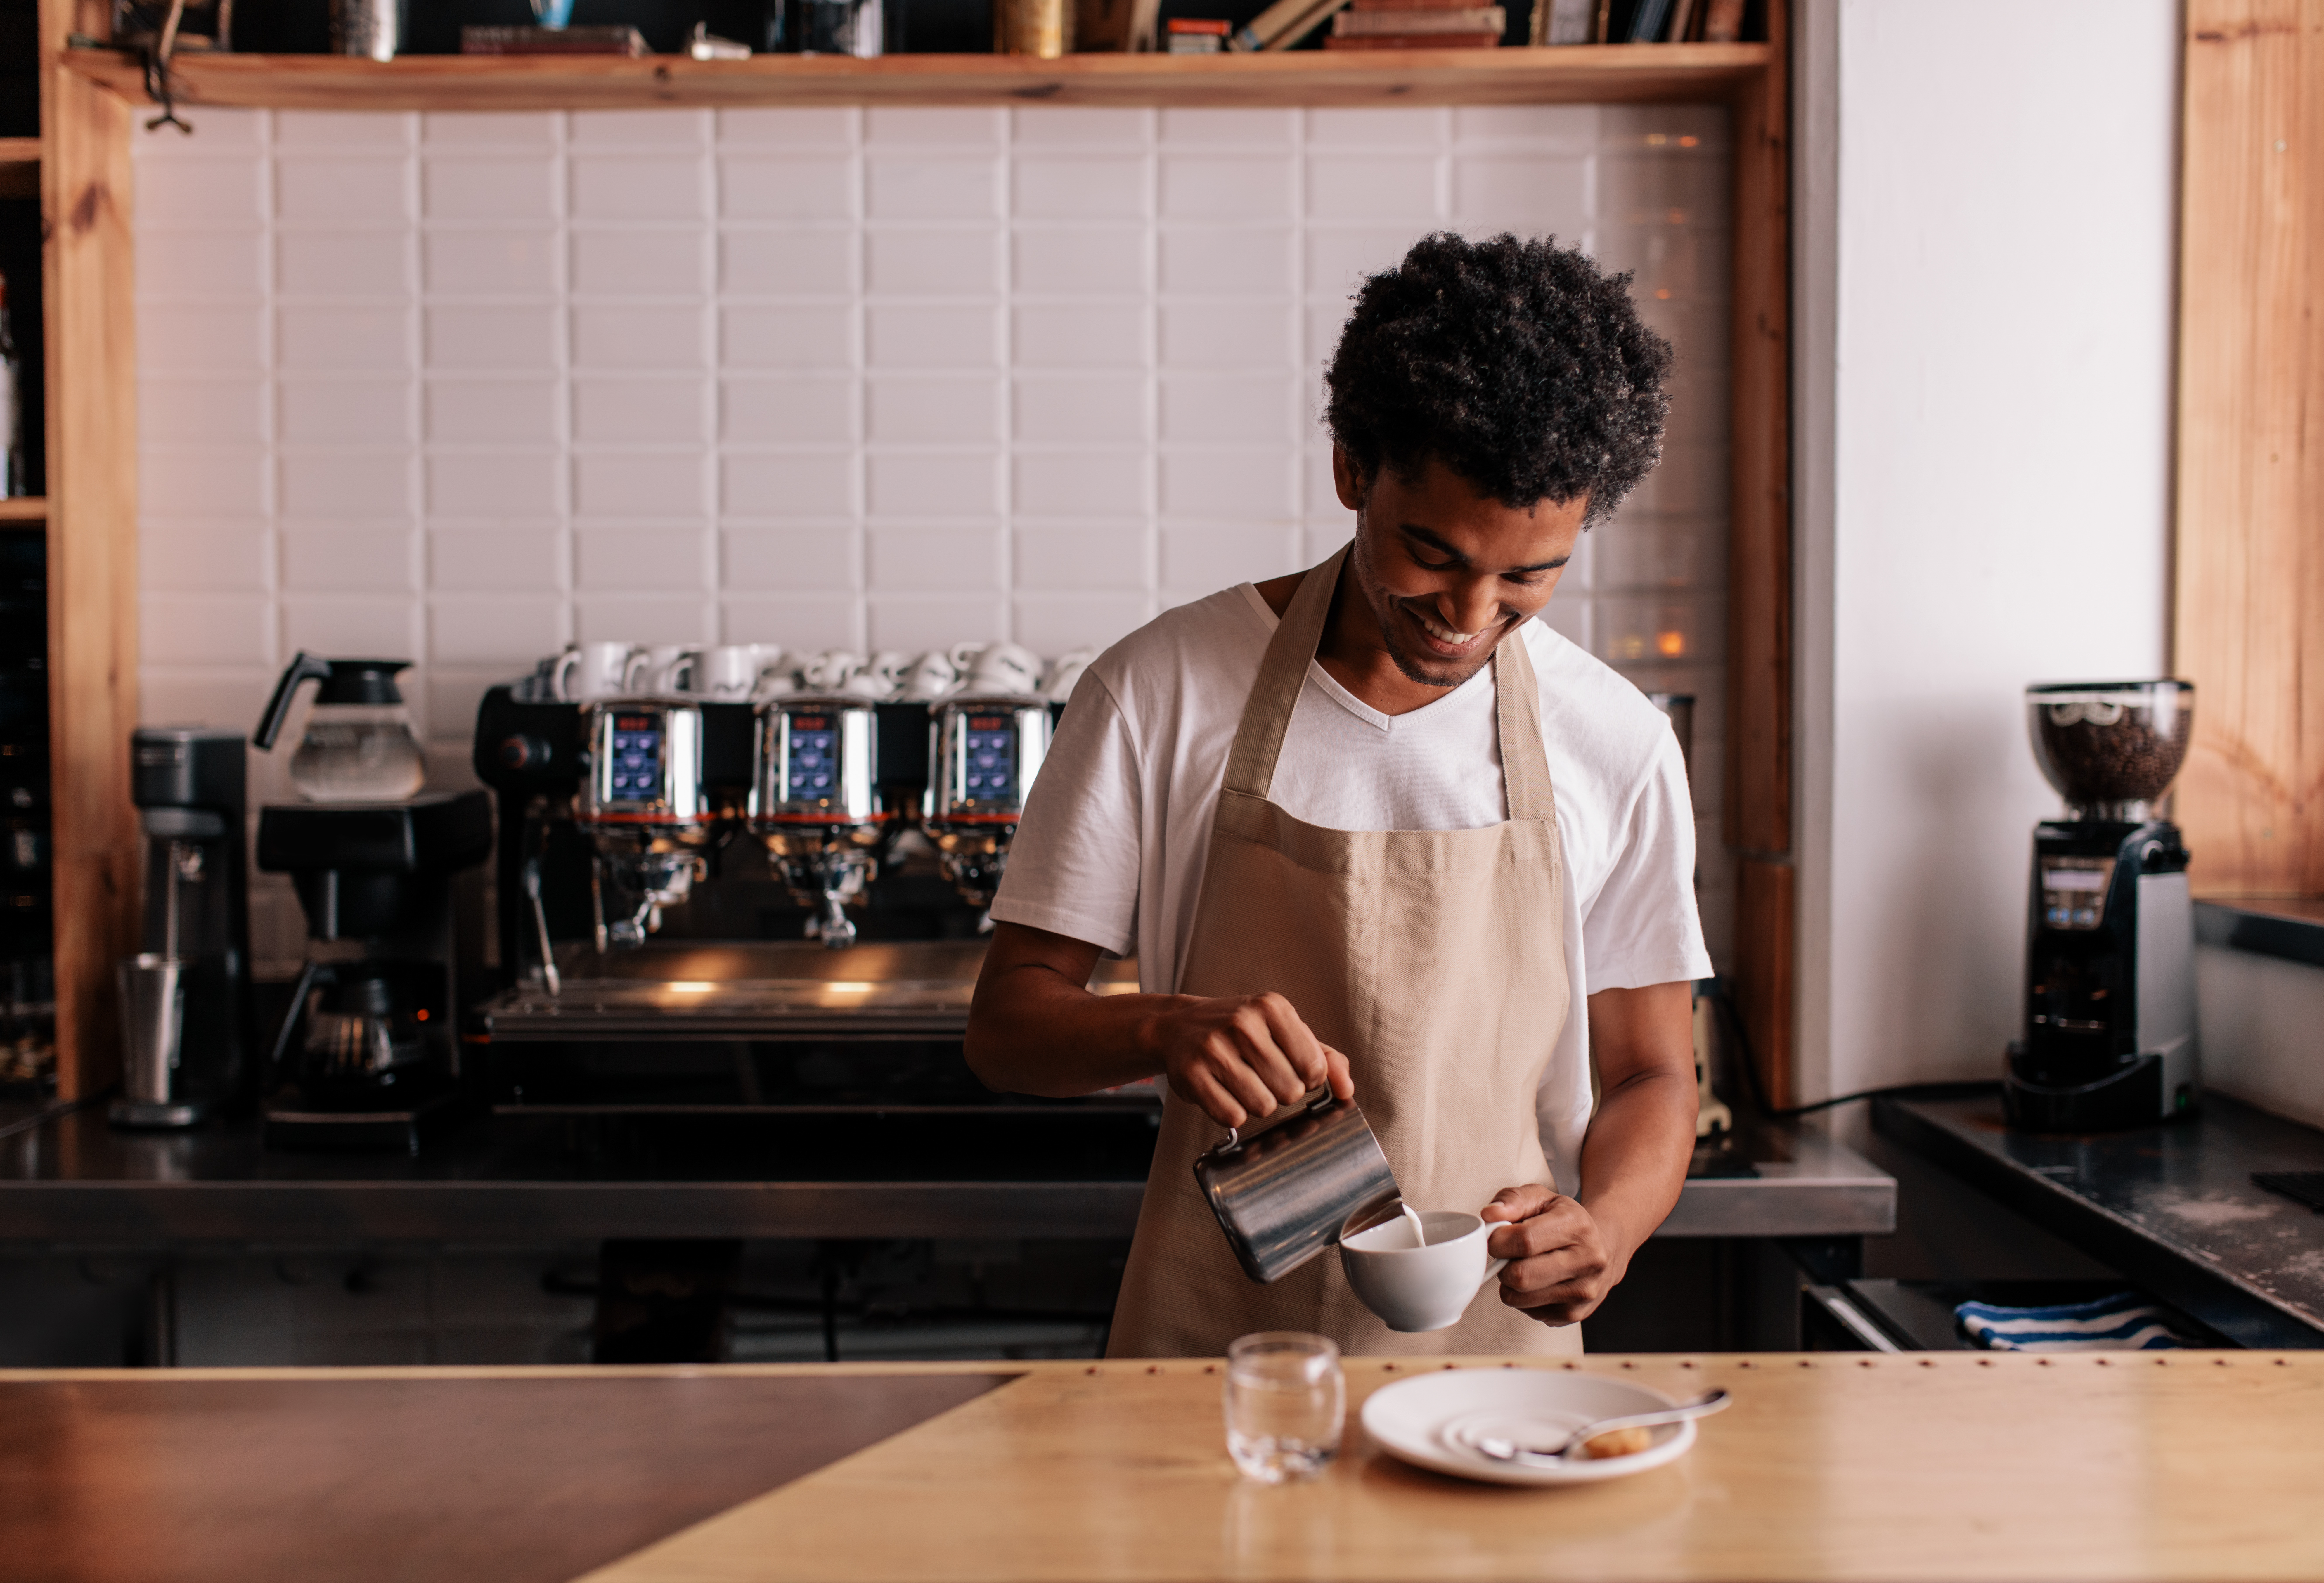 Professional barista preparing coffee on counter. | Source: Shutterstock